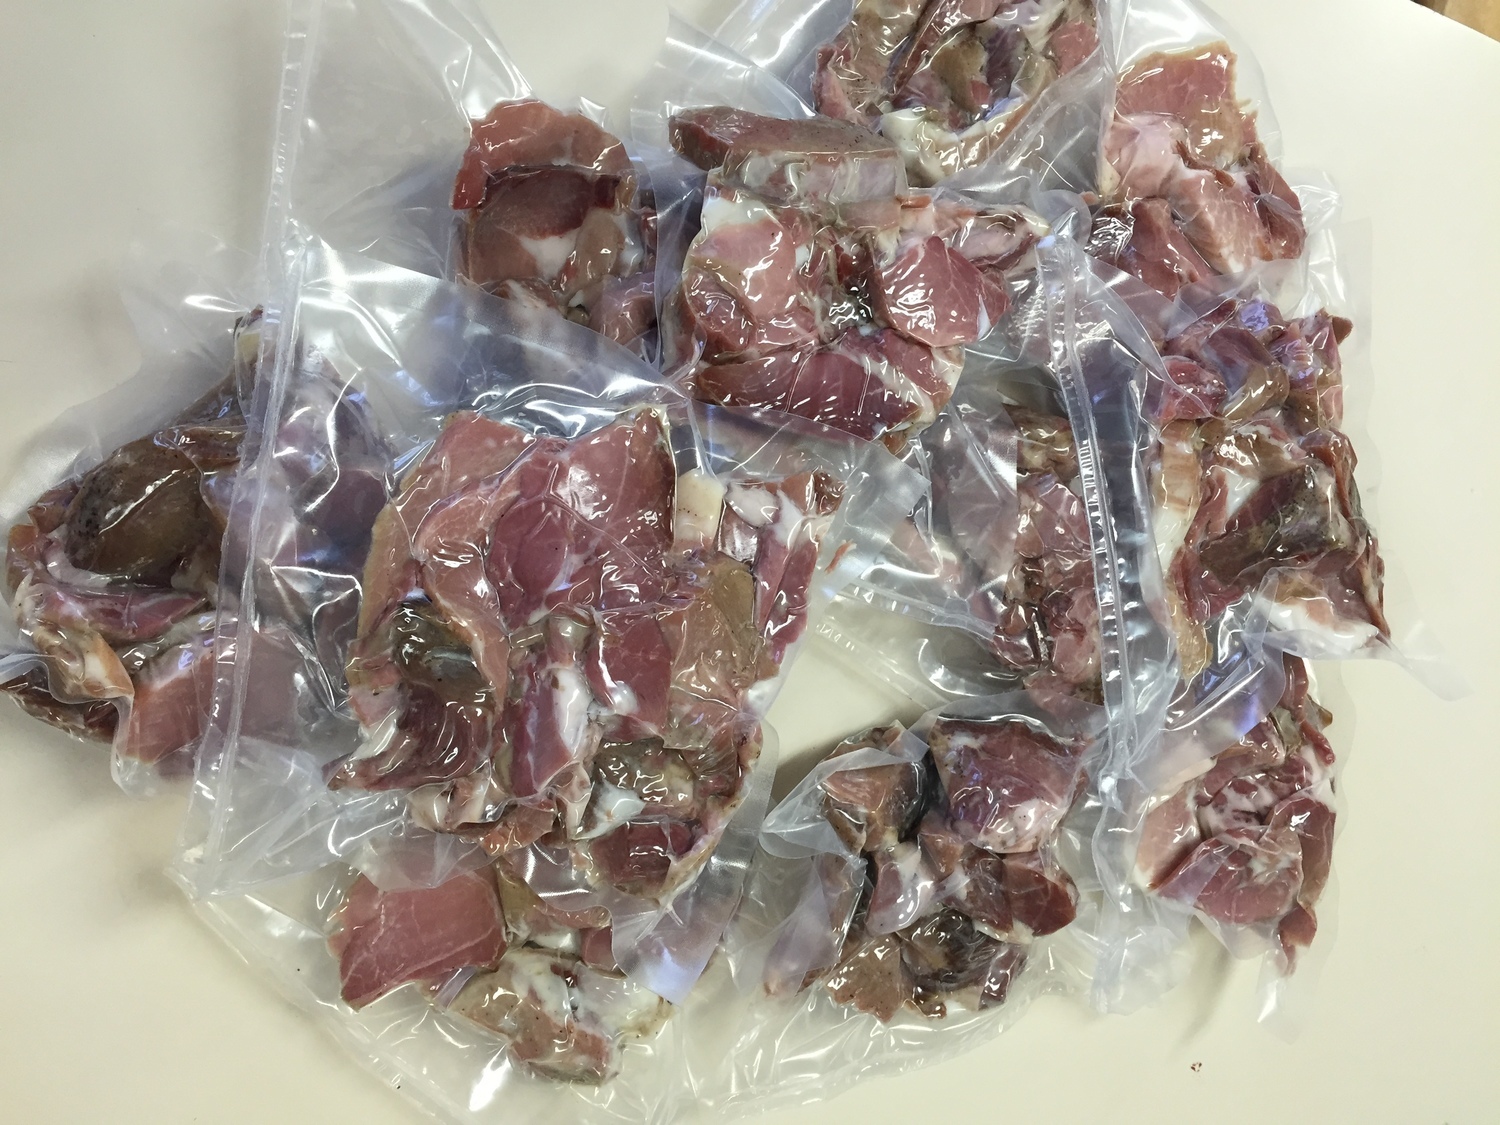 Country Ham Seasoning Meat